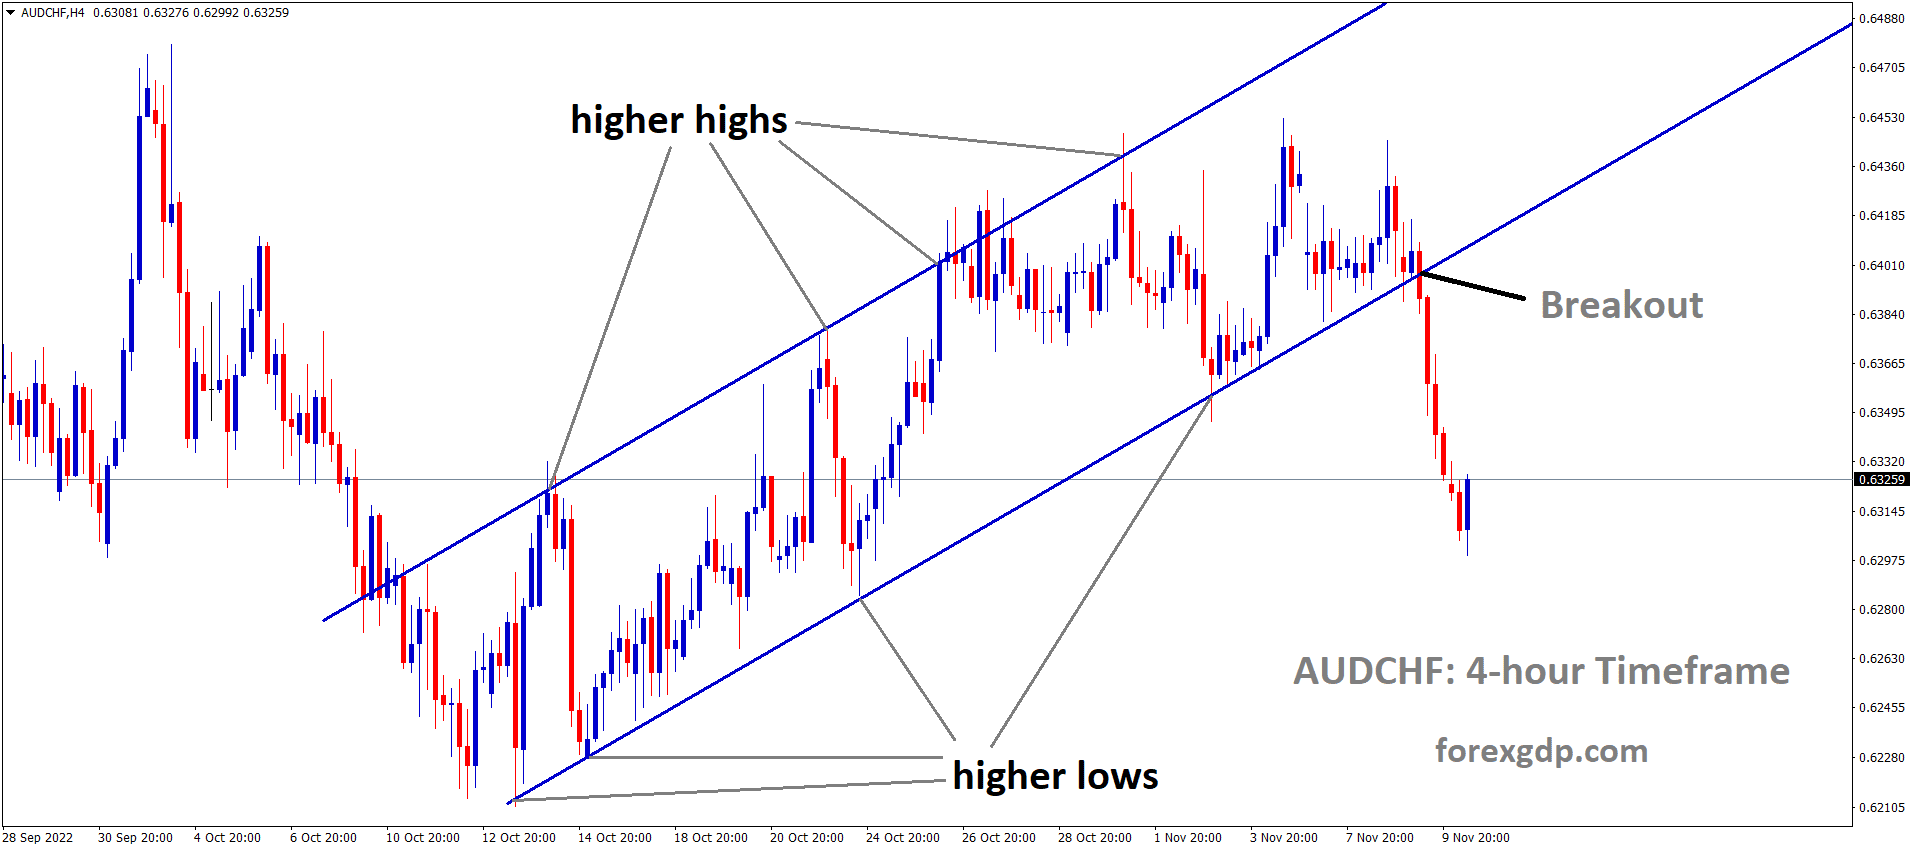 AUDCHF has broken the ascending channel in Downside